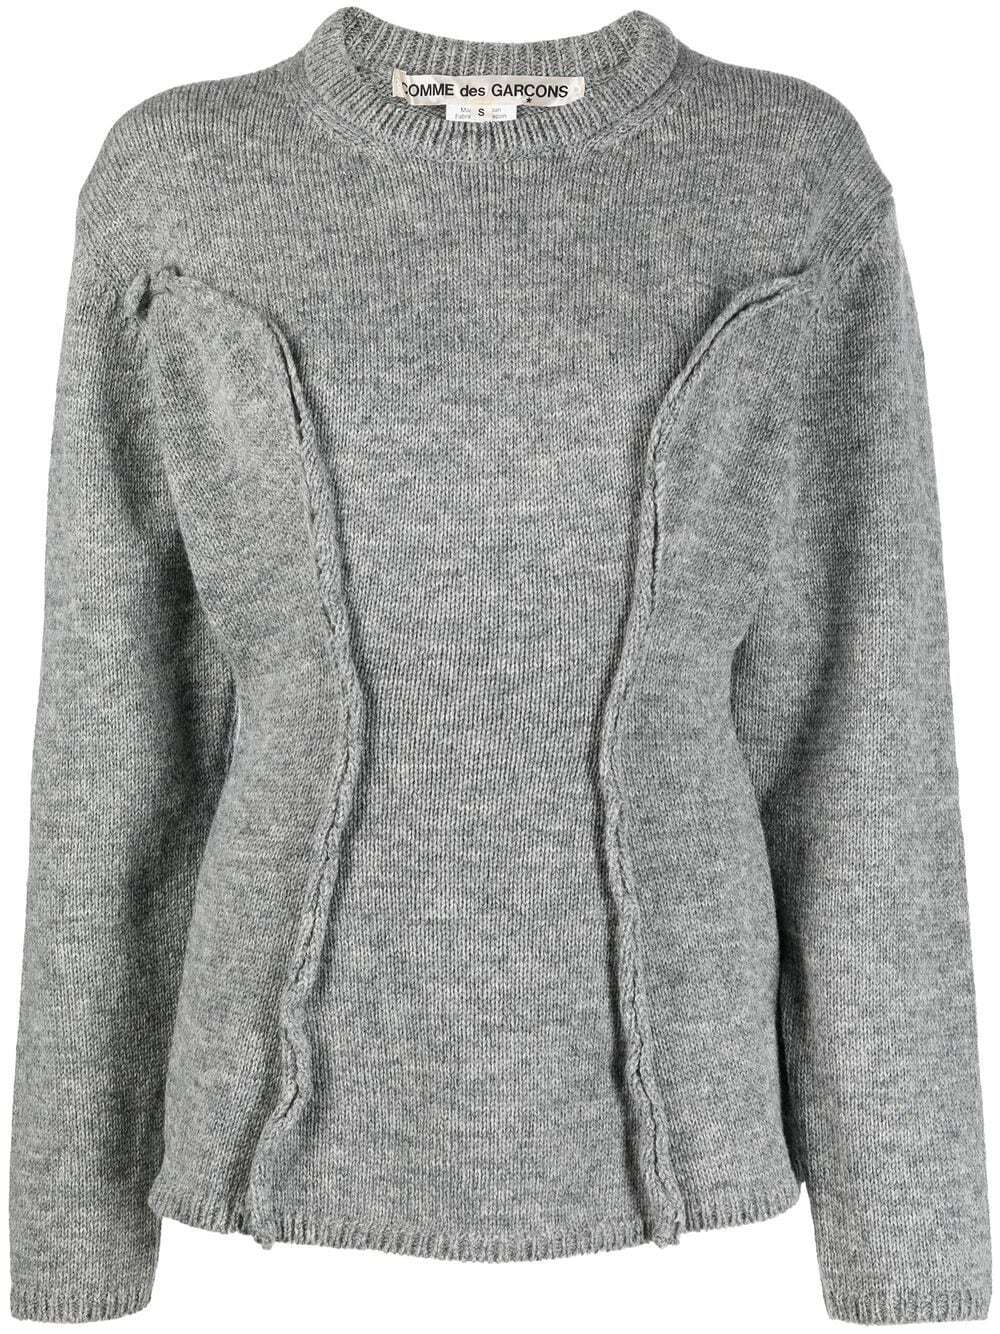 Comme Des Garçons exposed-seam wool jumper - Grey